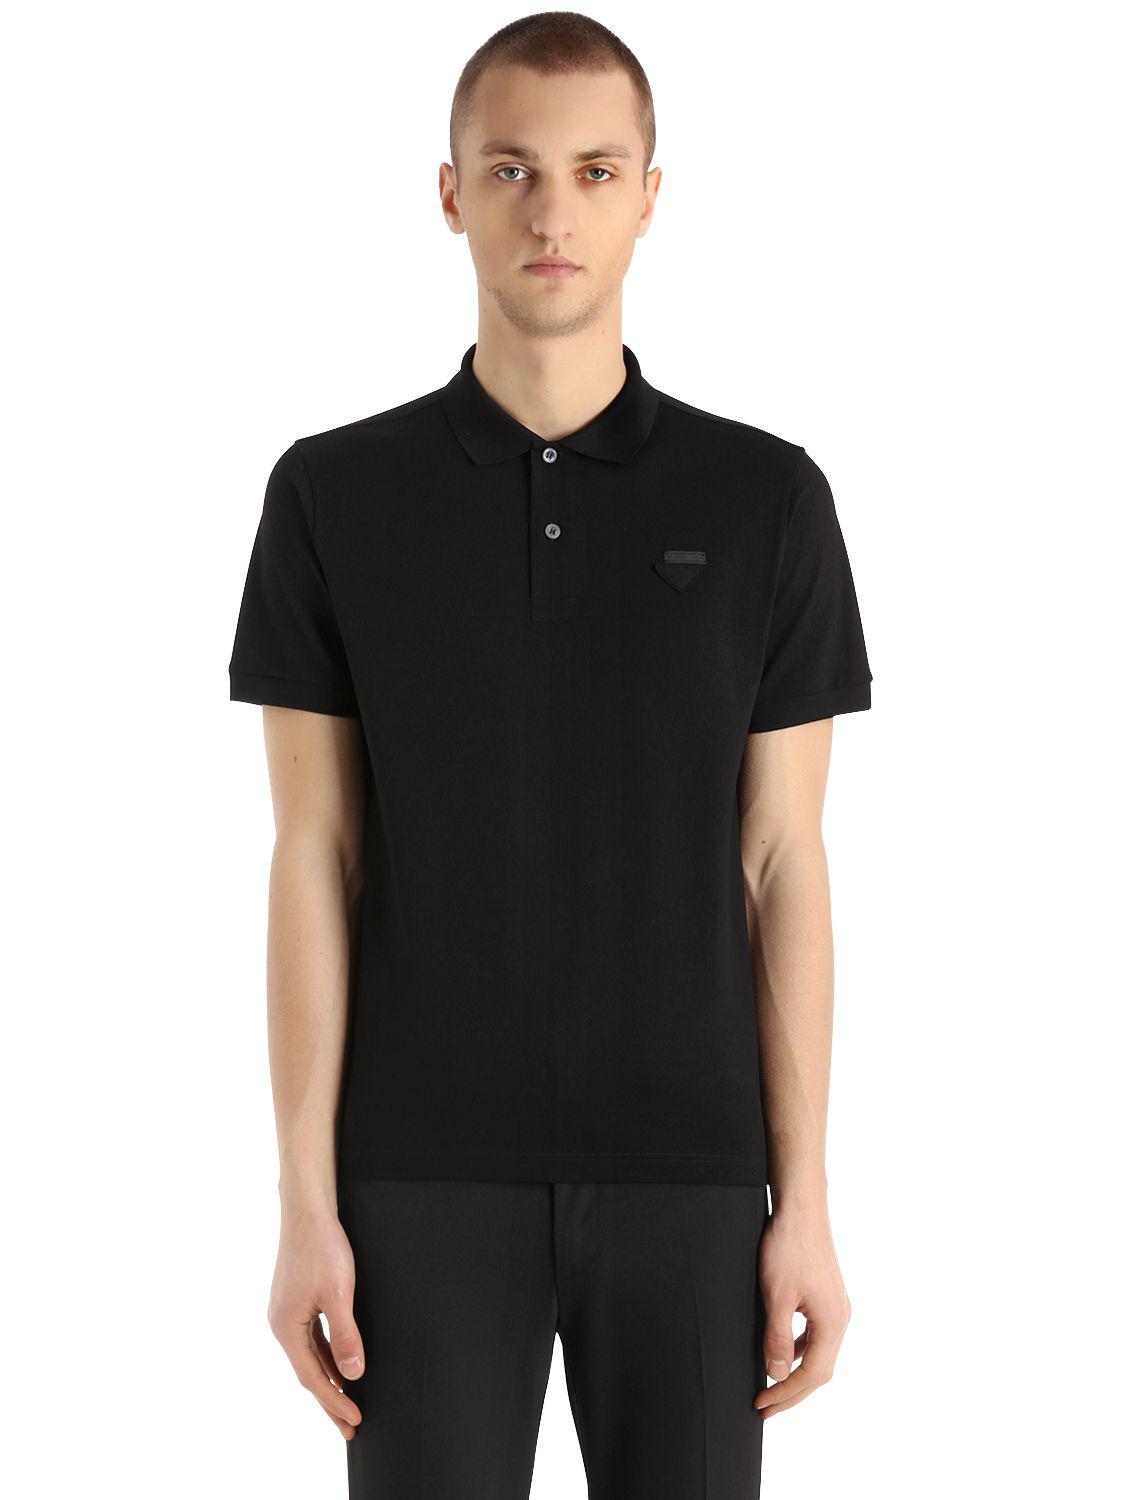 Prada Cotton Piqué Polo Shirt in Black for Men - Lyst